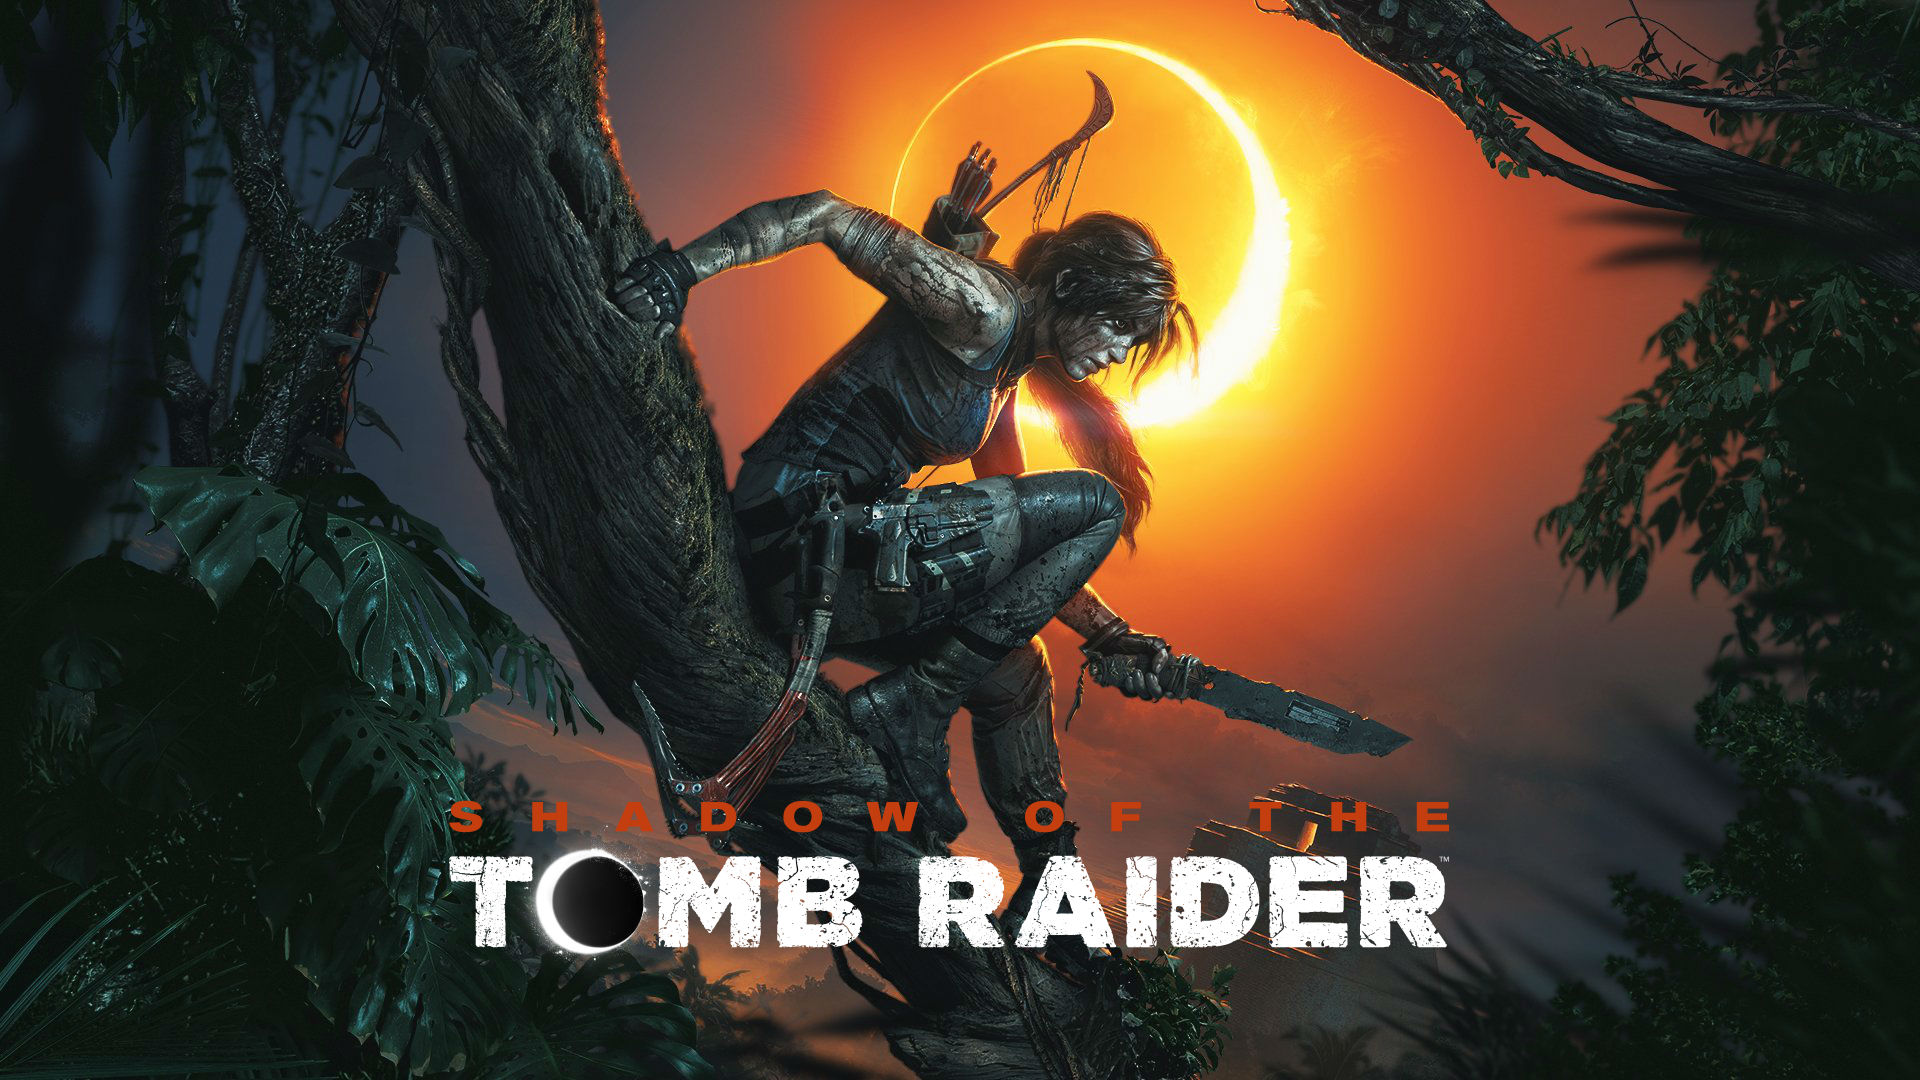 tomb raider definitive edition pc download